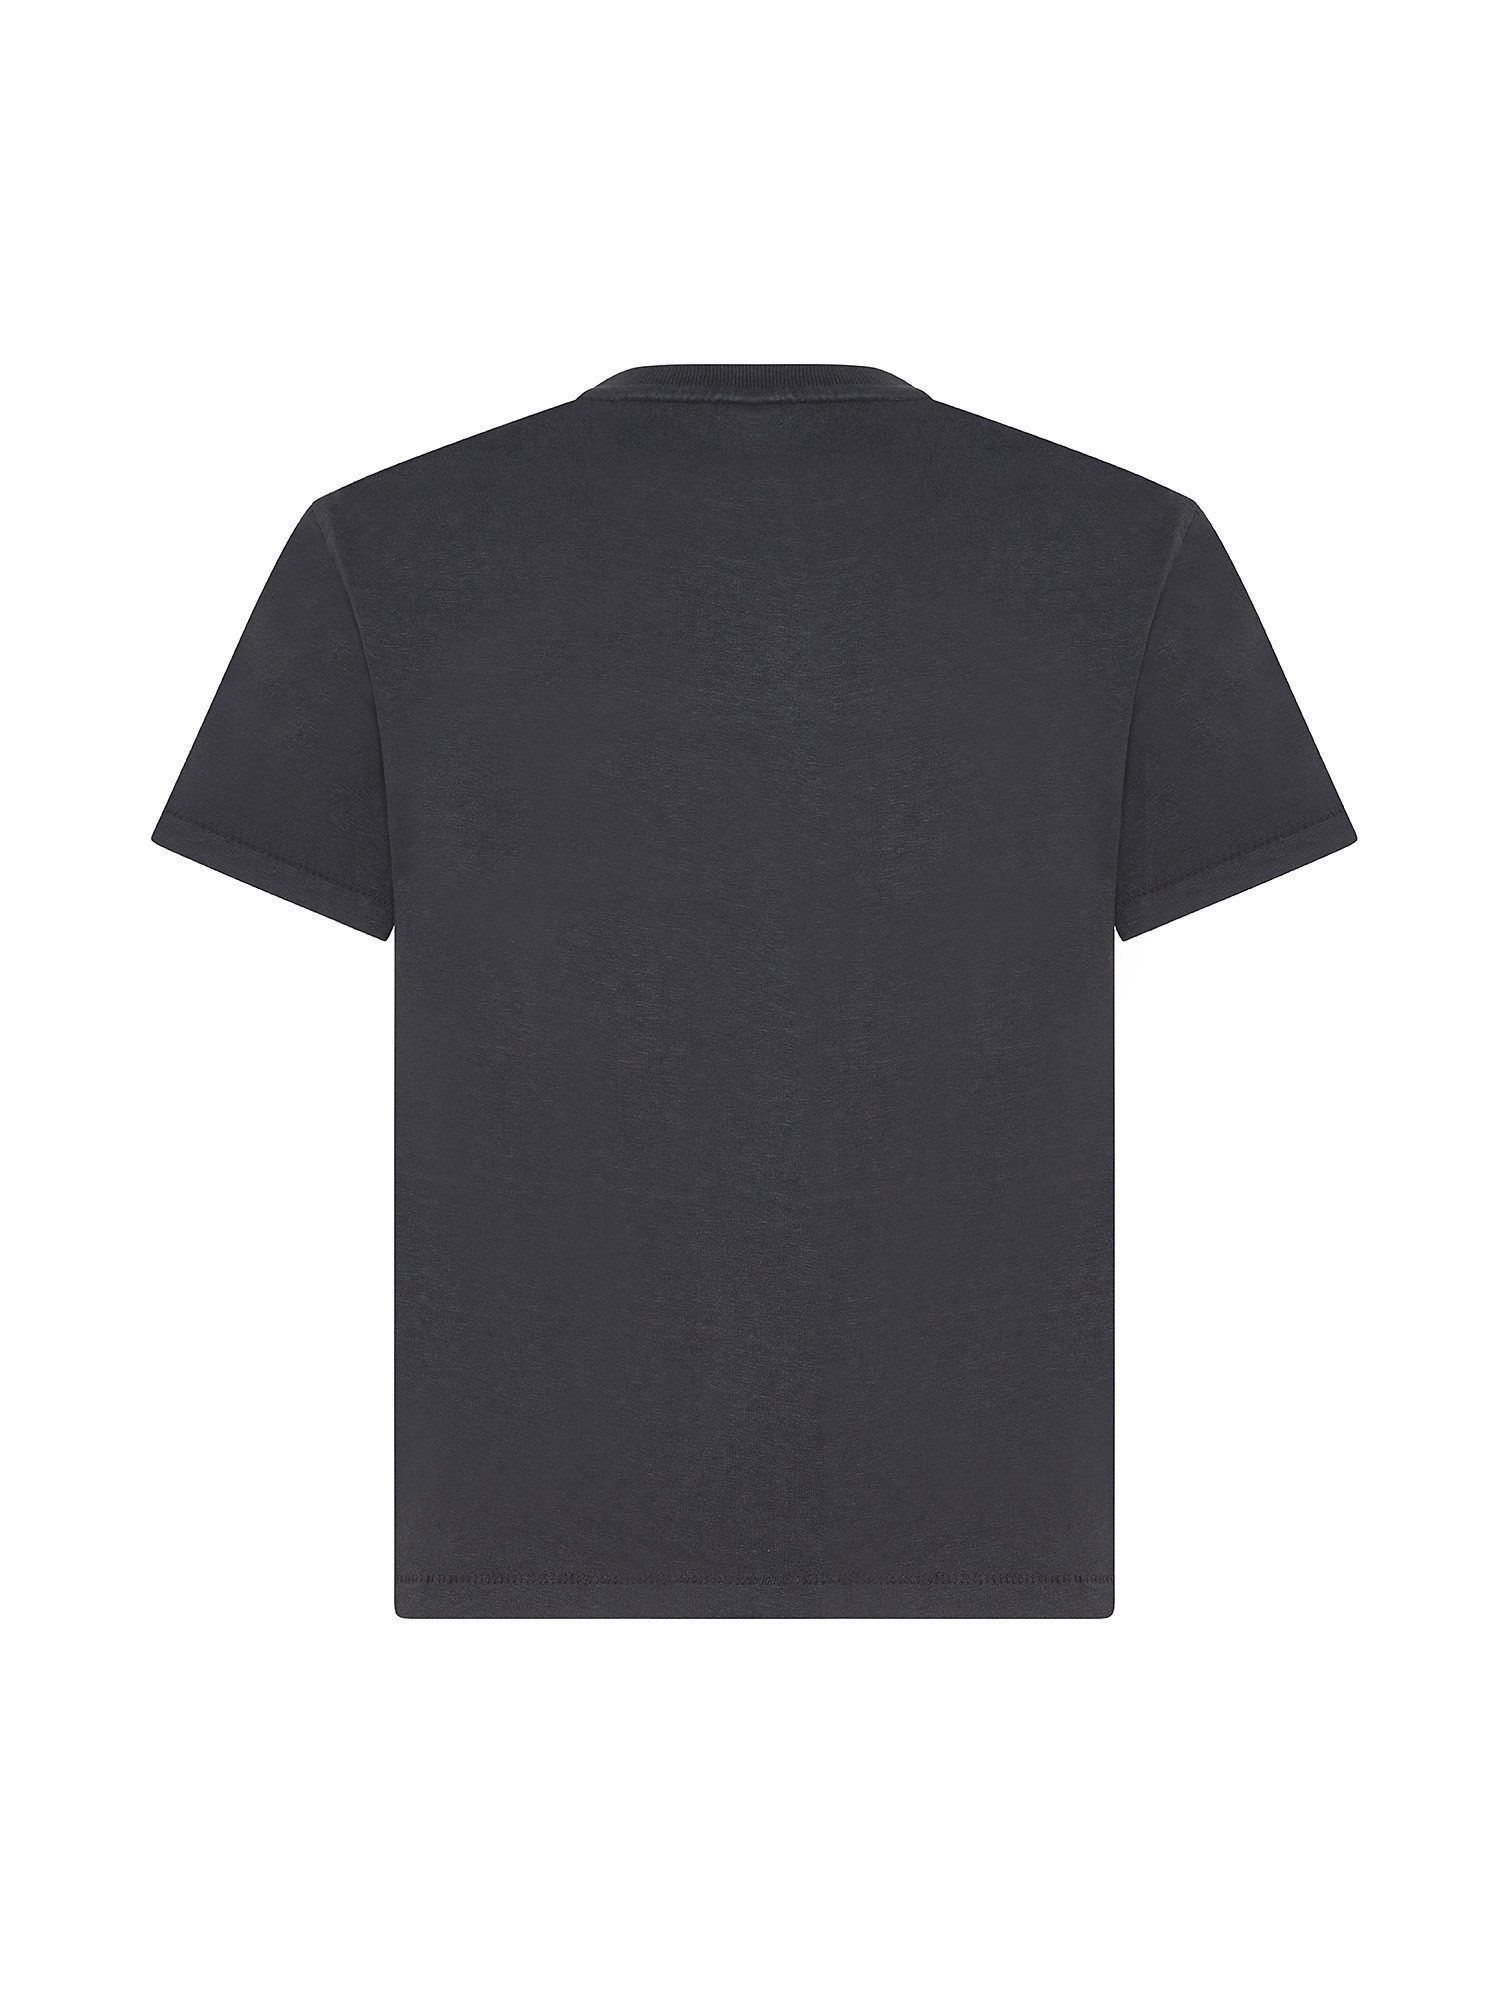 Levi's - classic fit t-shirt, Black, large image number 1